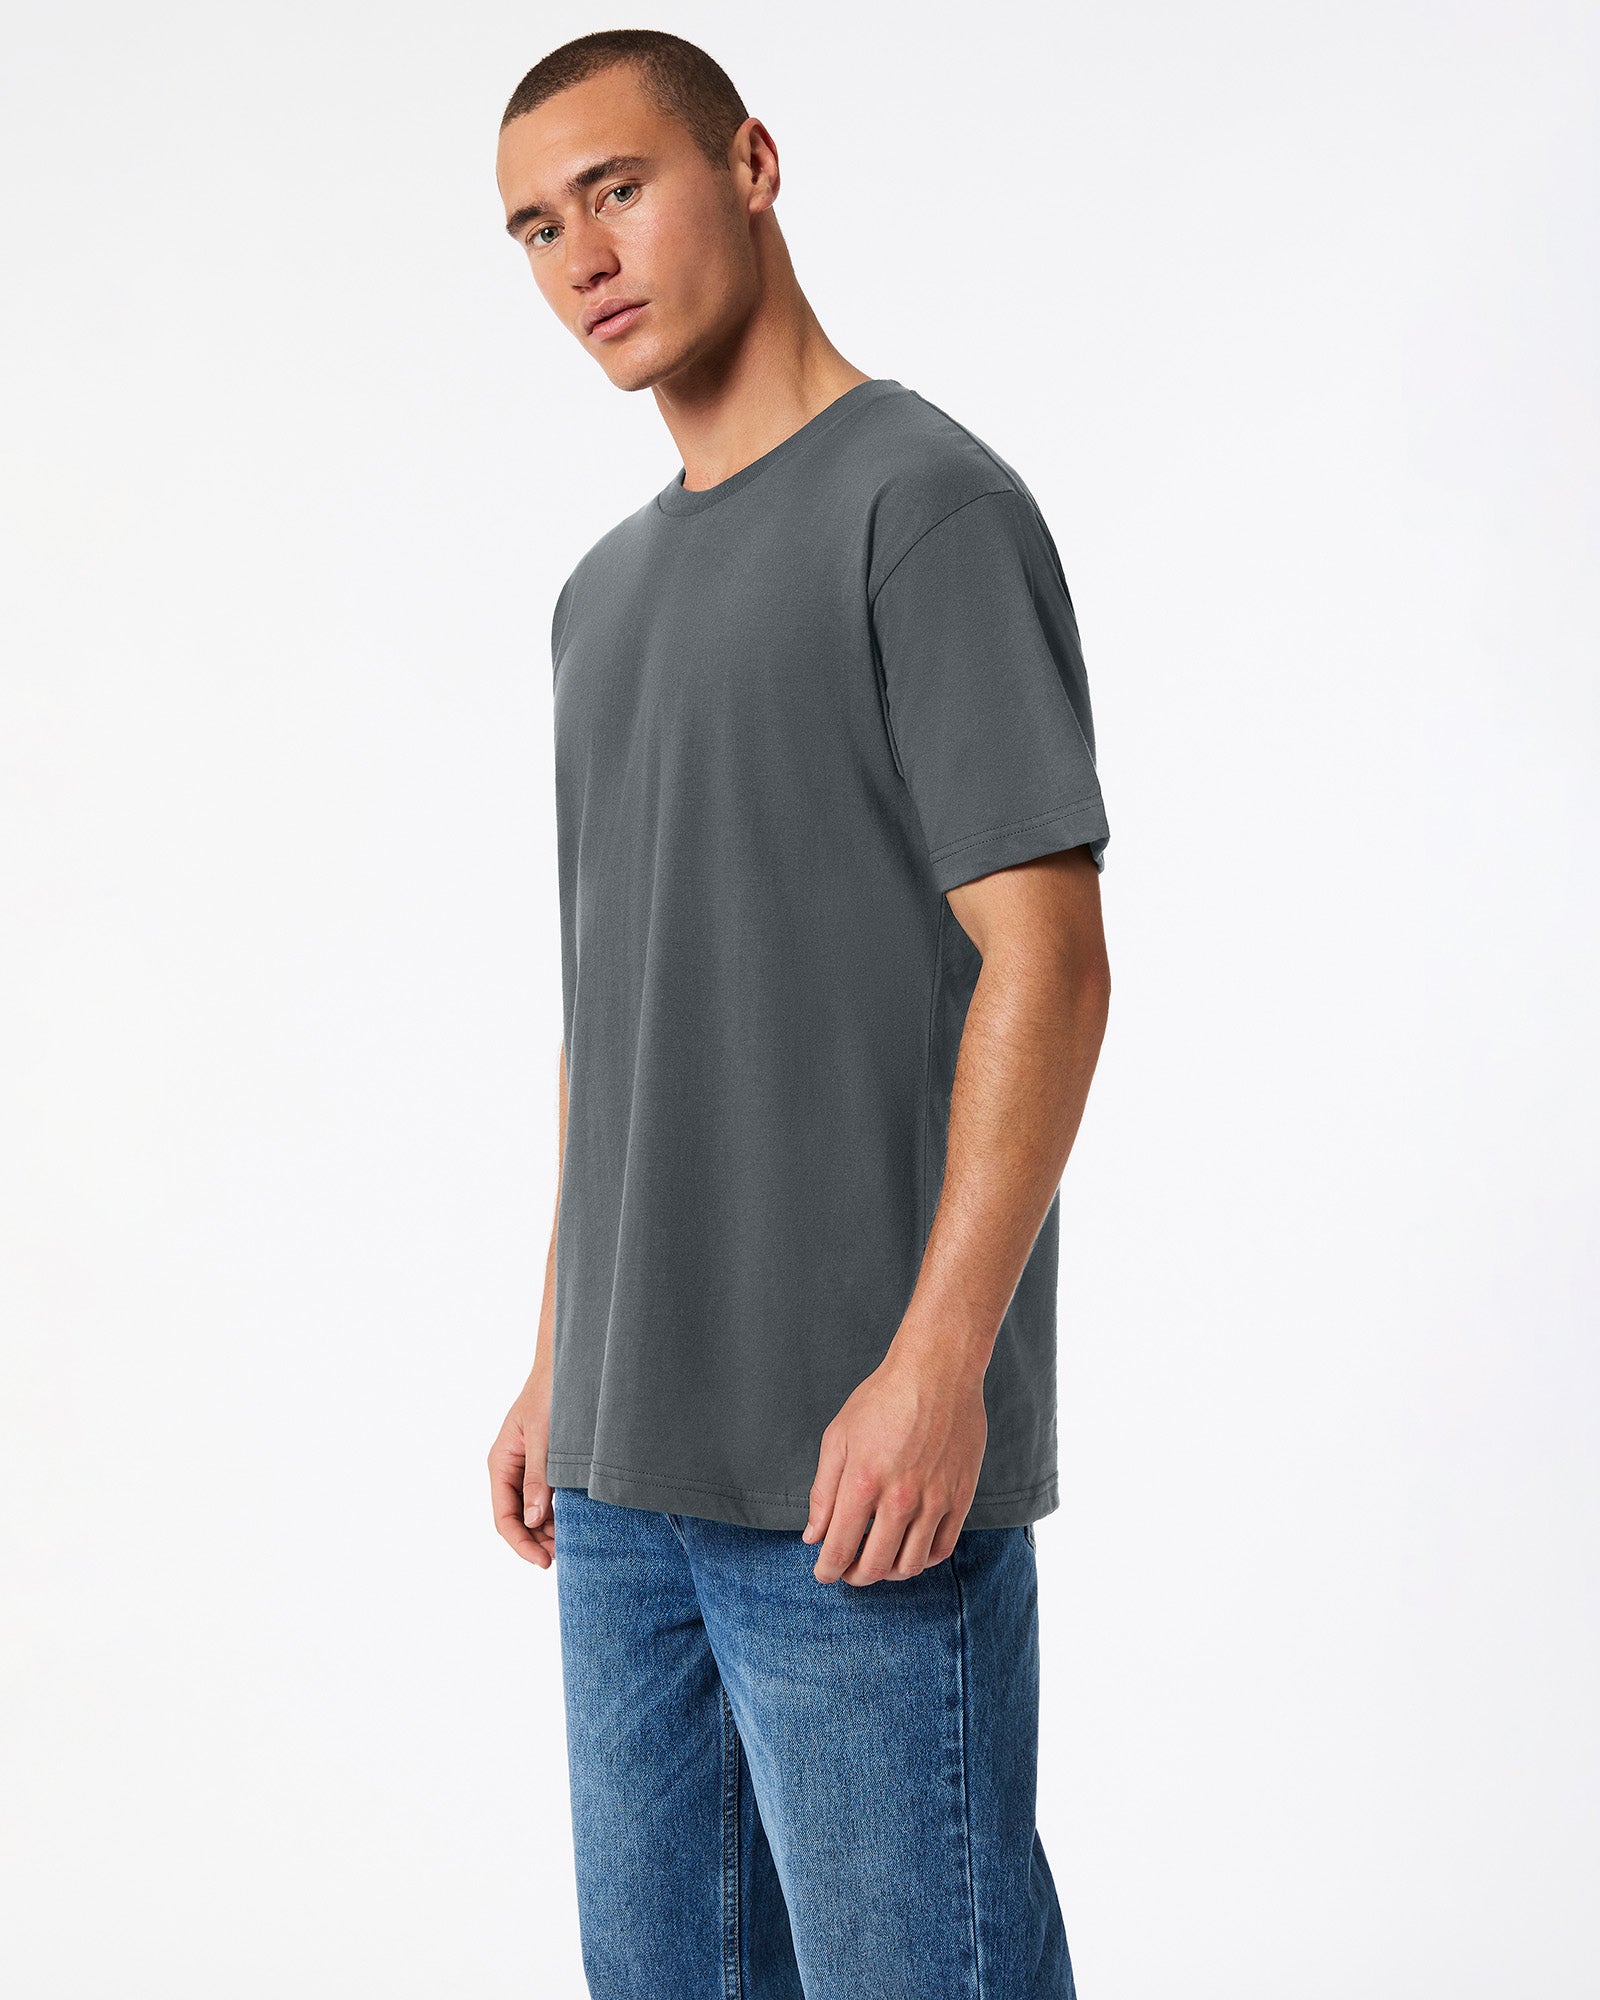 Fine Jersey Unisex Short Sleeve T-Shirt - Asphalt